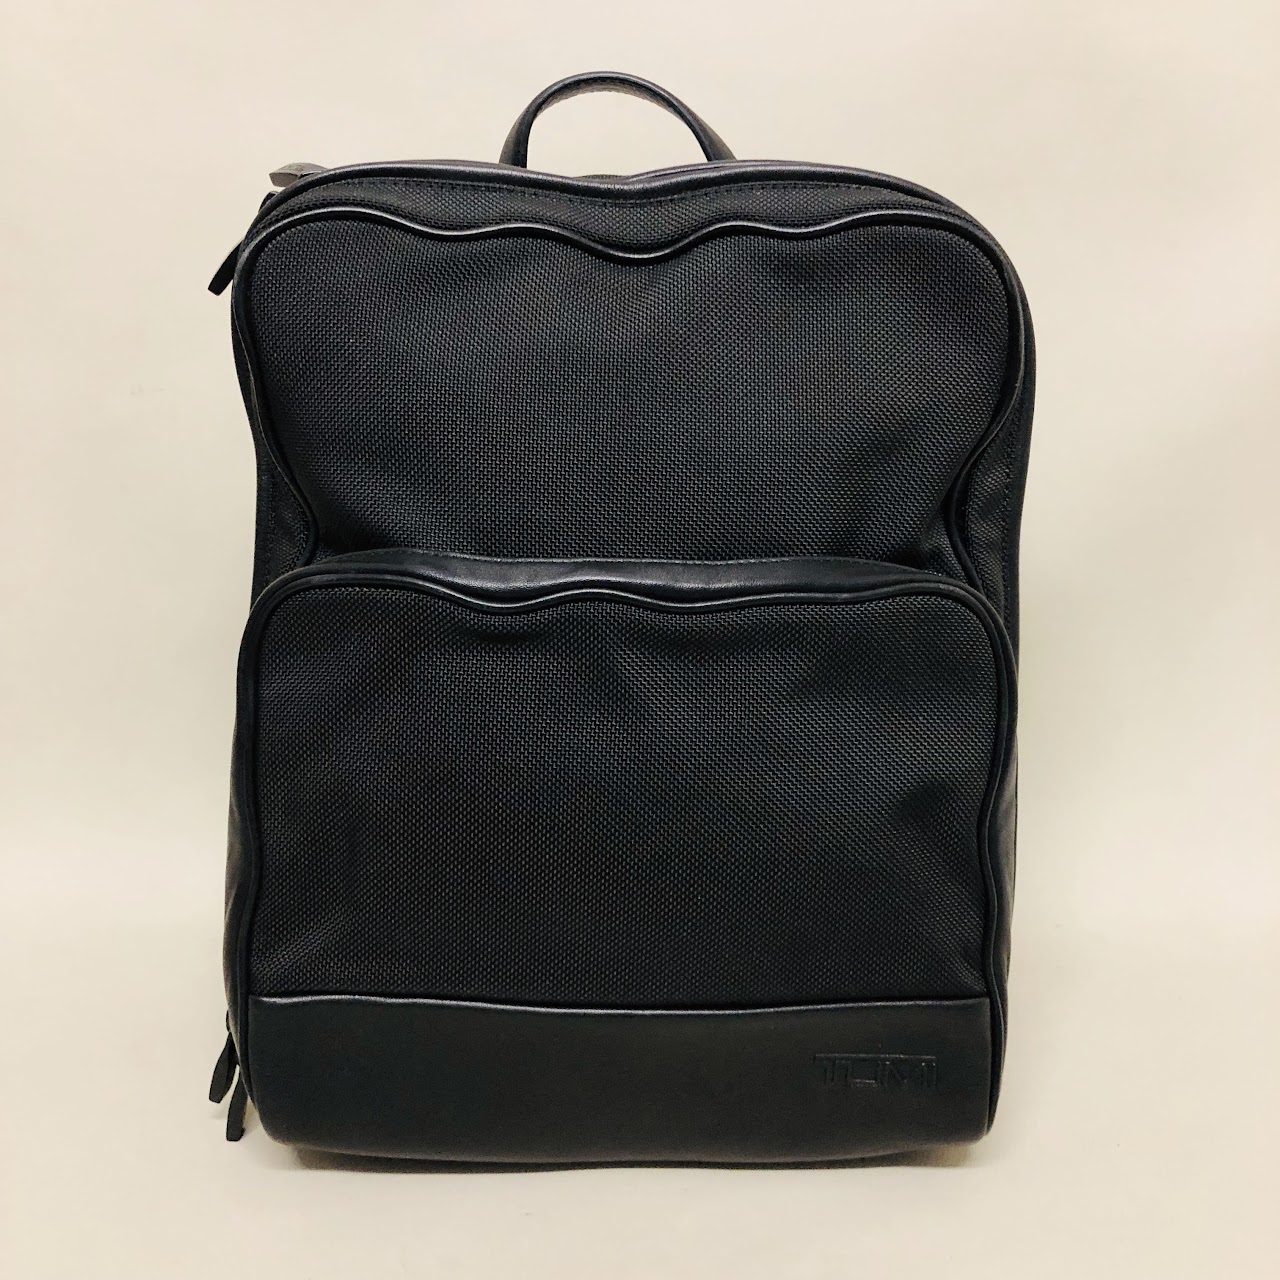 Tumi Small Backpack